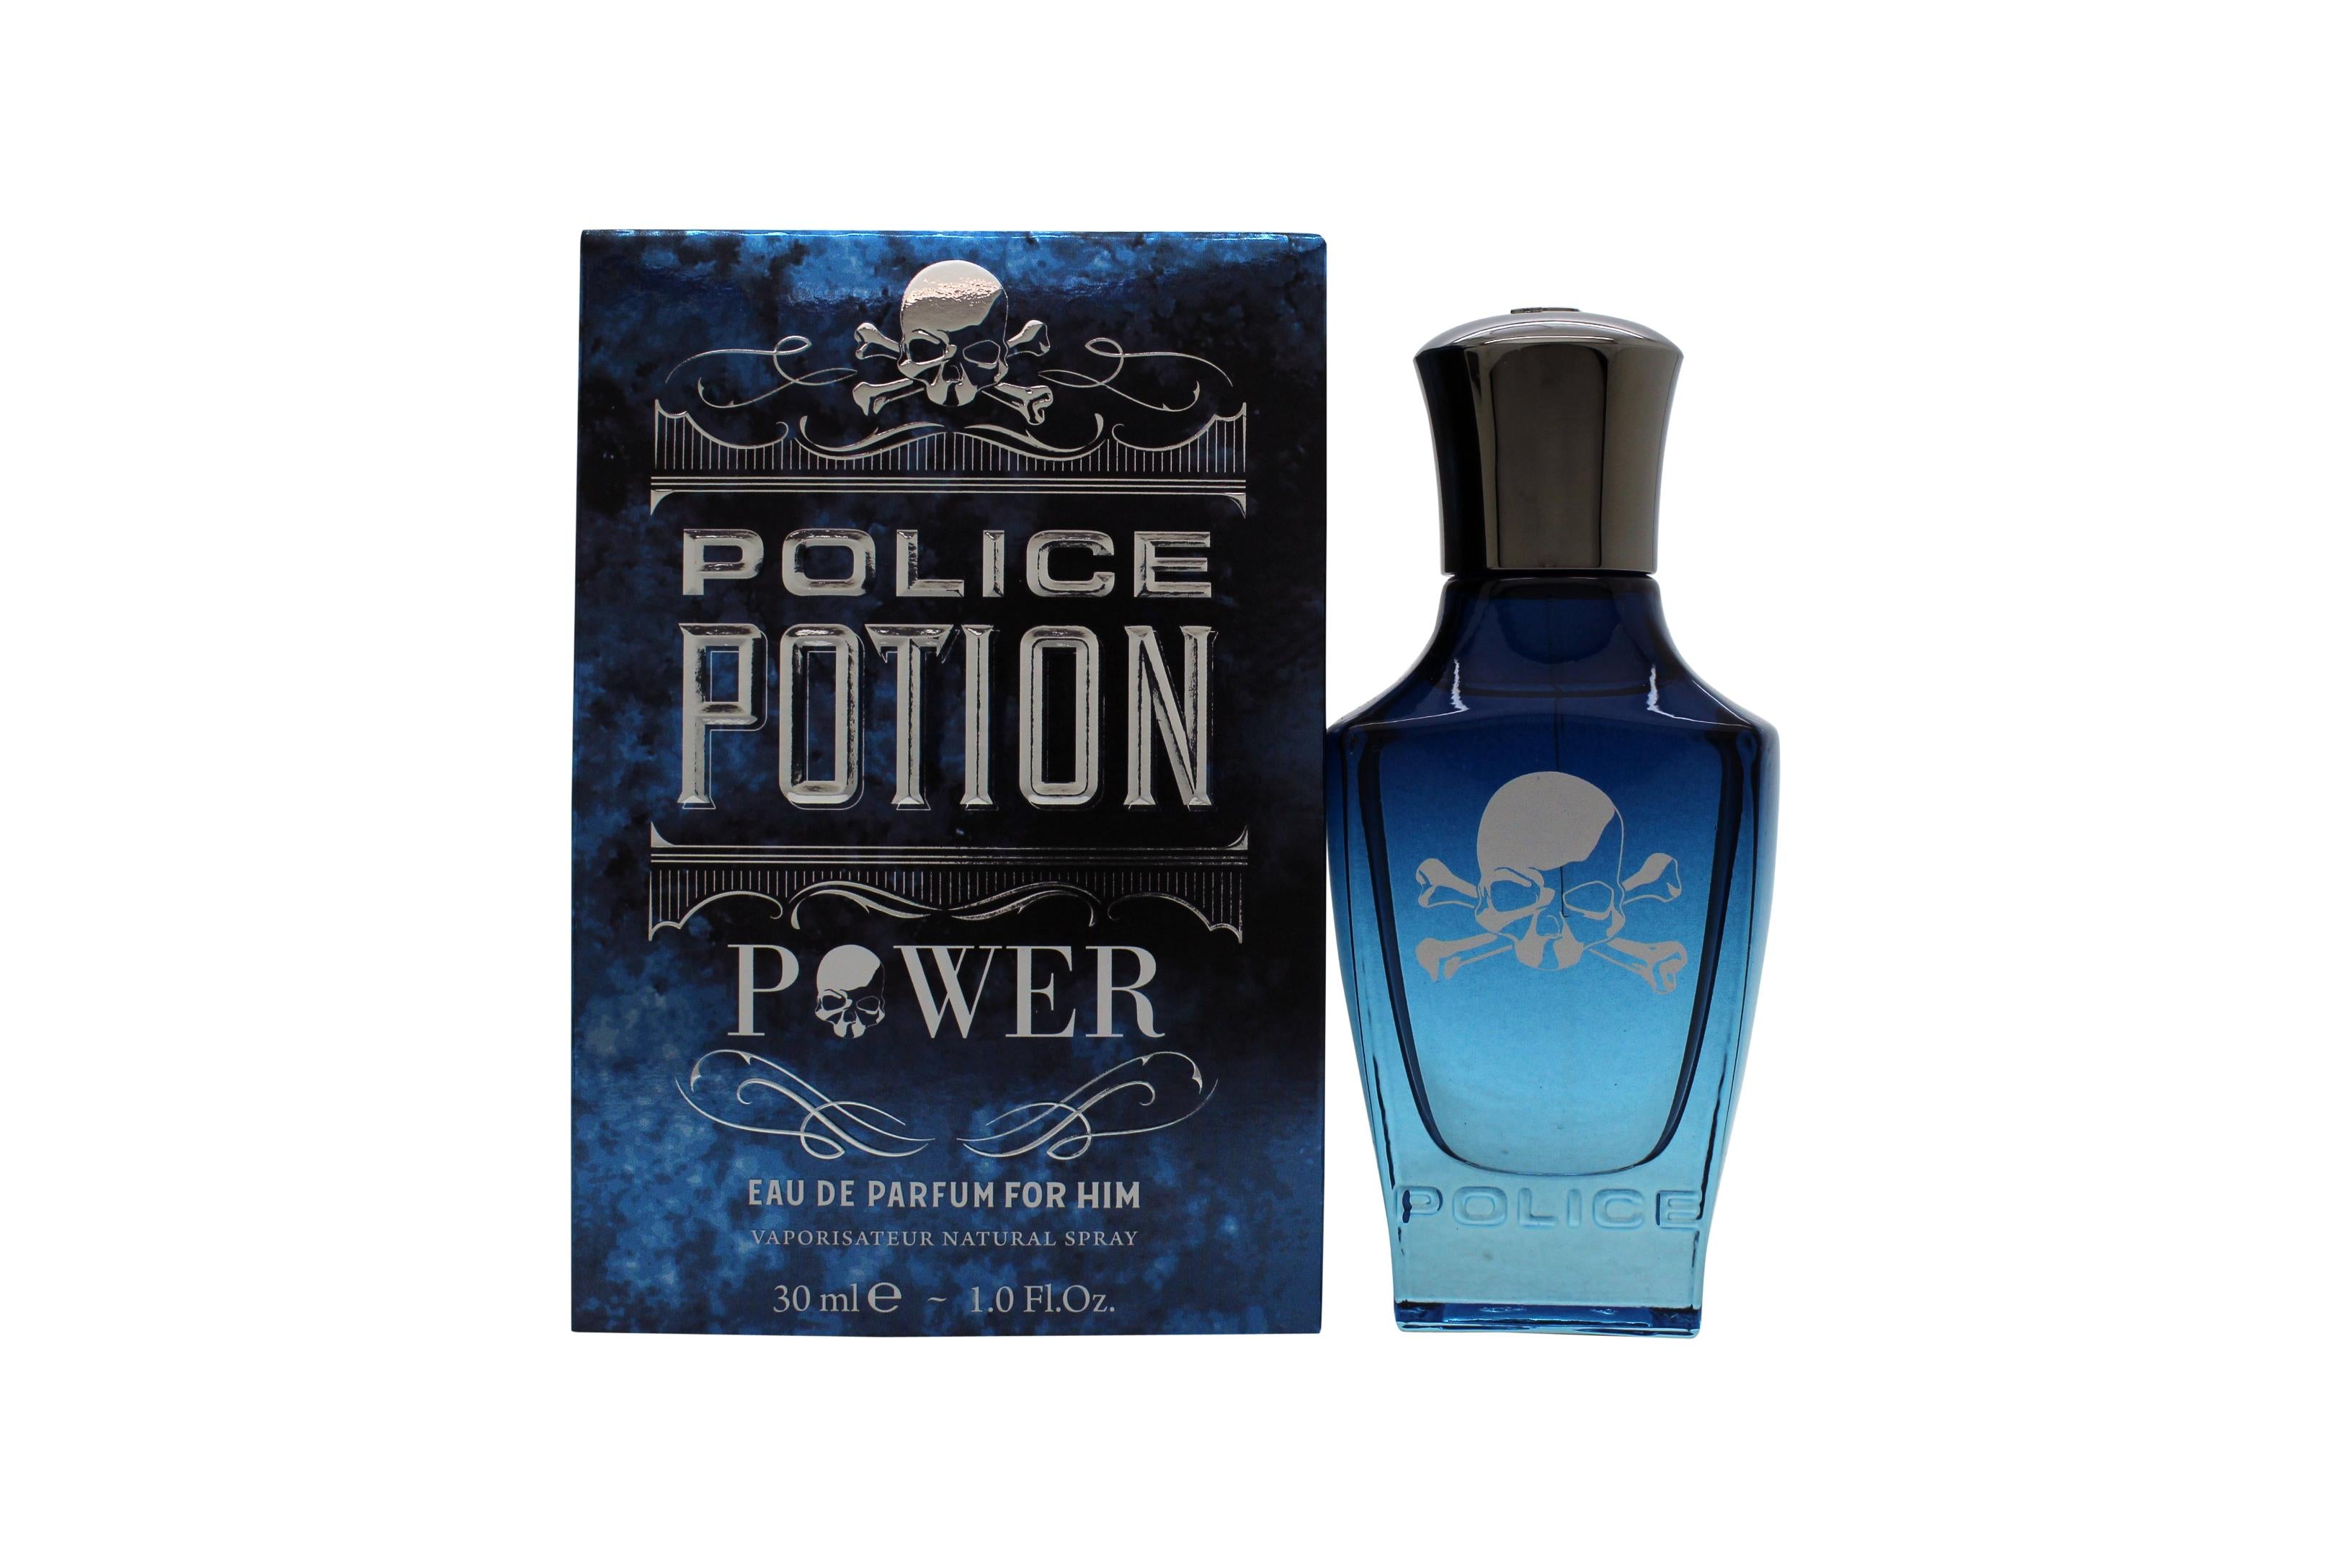 View Police Potion Power Eau de Parfum 30ml Spray information